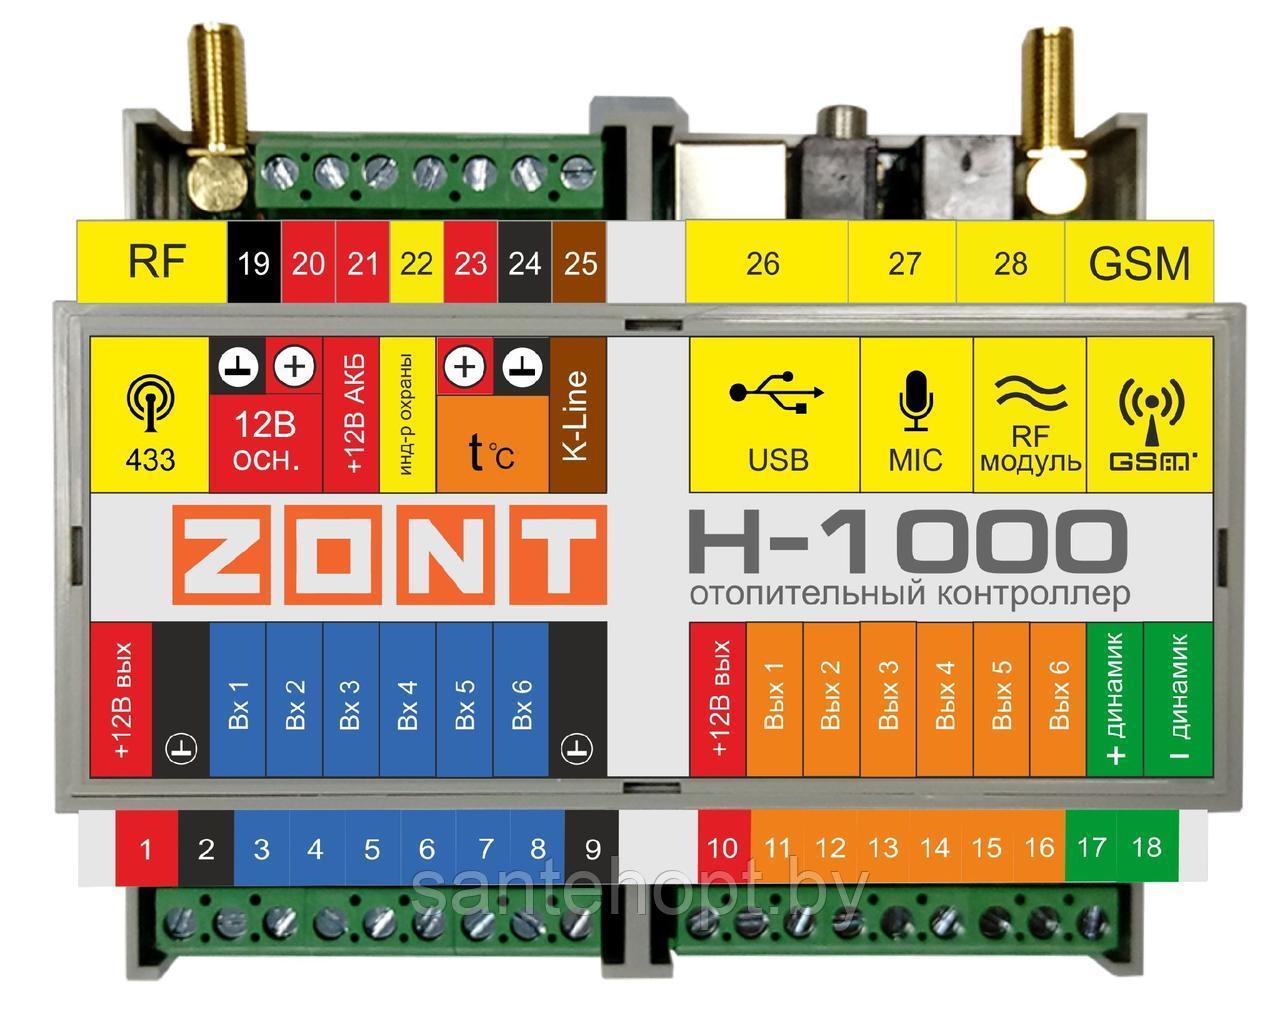 GSM термостат-контроллер "ZONT H1000+"